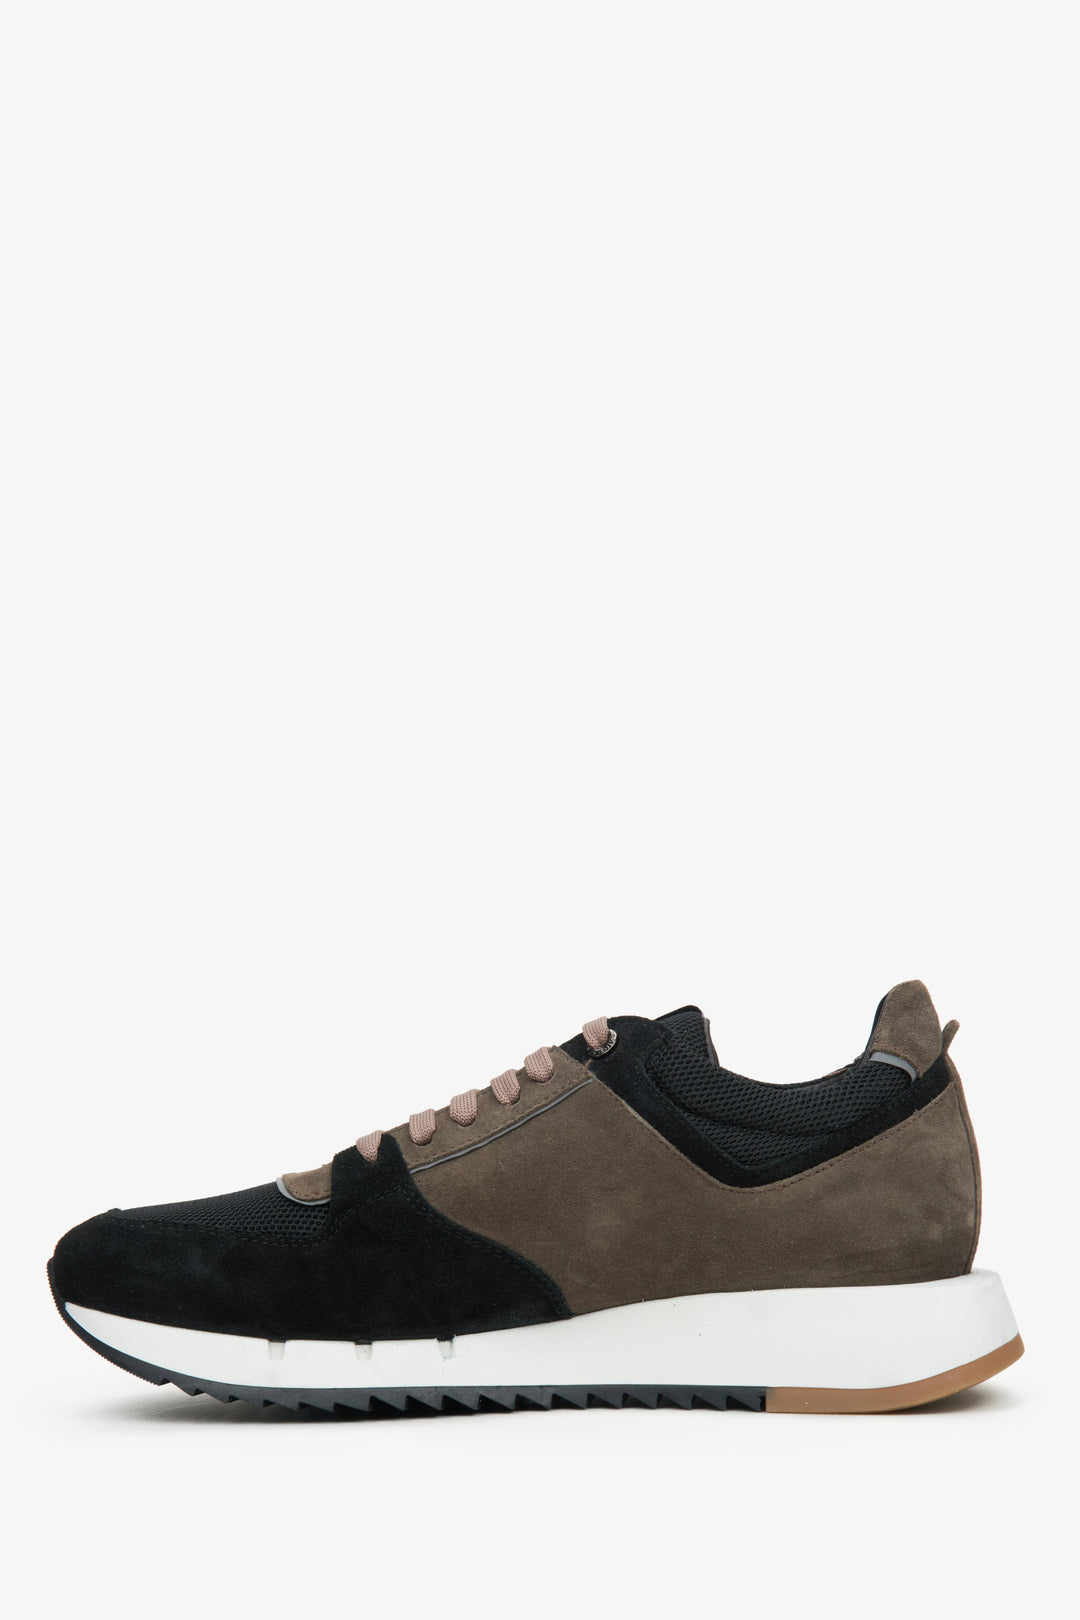 Comfortable men's black and brown sneakers by Estro - shoe profile.